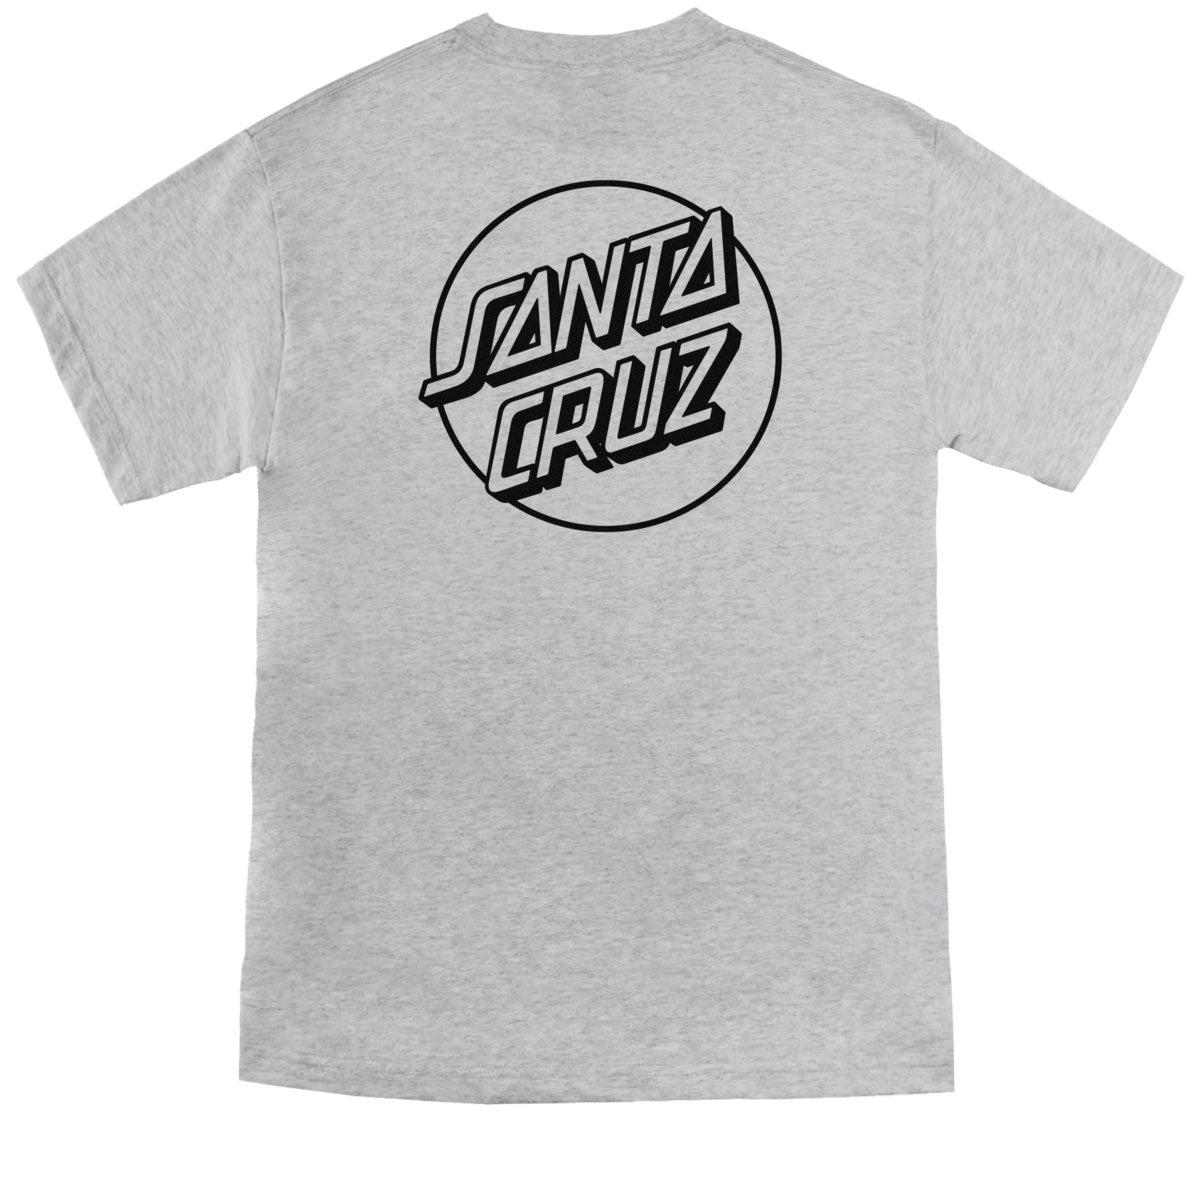 Santa Cruz Opus Dot T-Shirt - Heather Grey/Black image 2